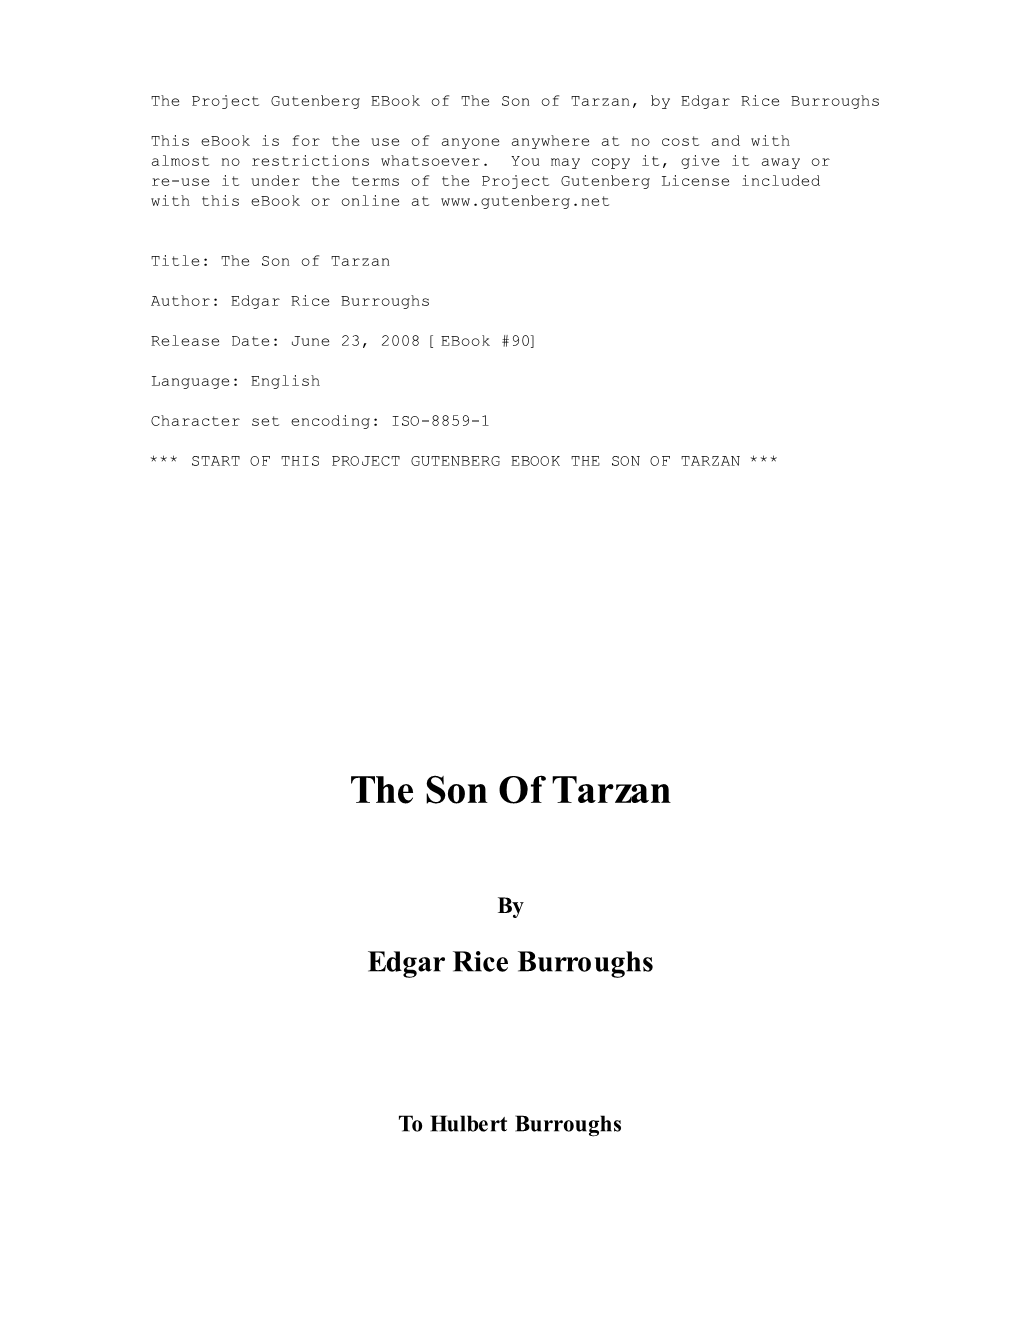 The Son of Tarzan, by Edgar Rice Burroughs